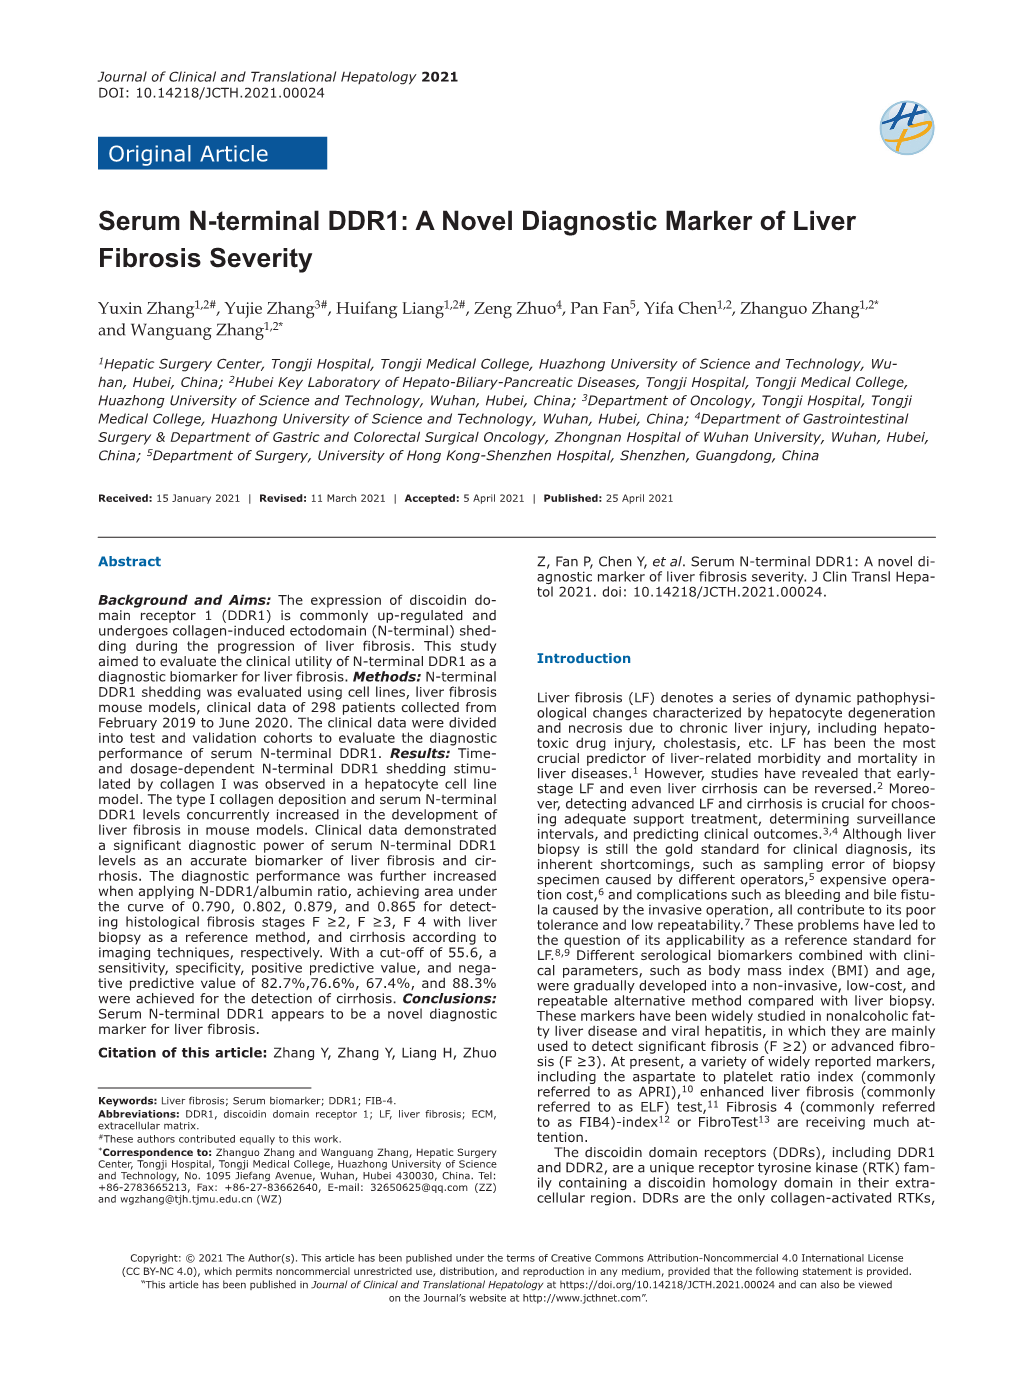 Serum N-Terminal DDR1: a Novel Diagnostic Marker of Liver Fibrosis Severity